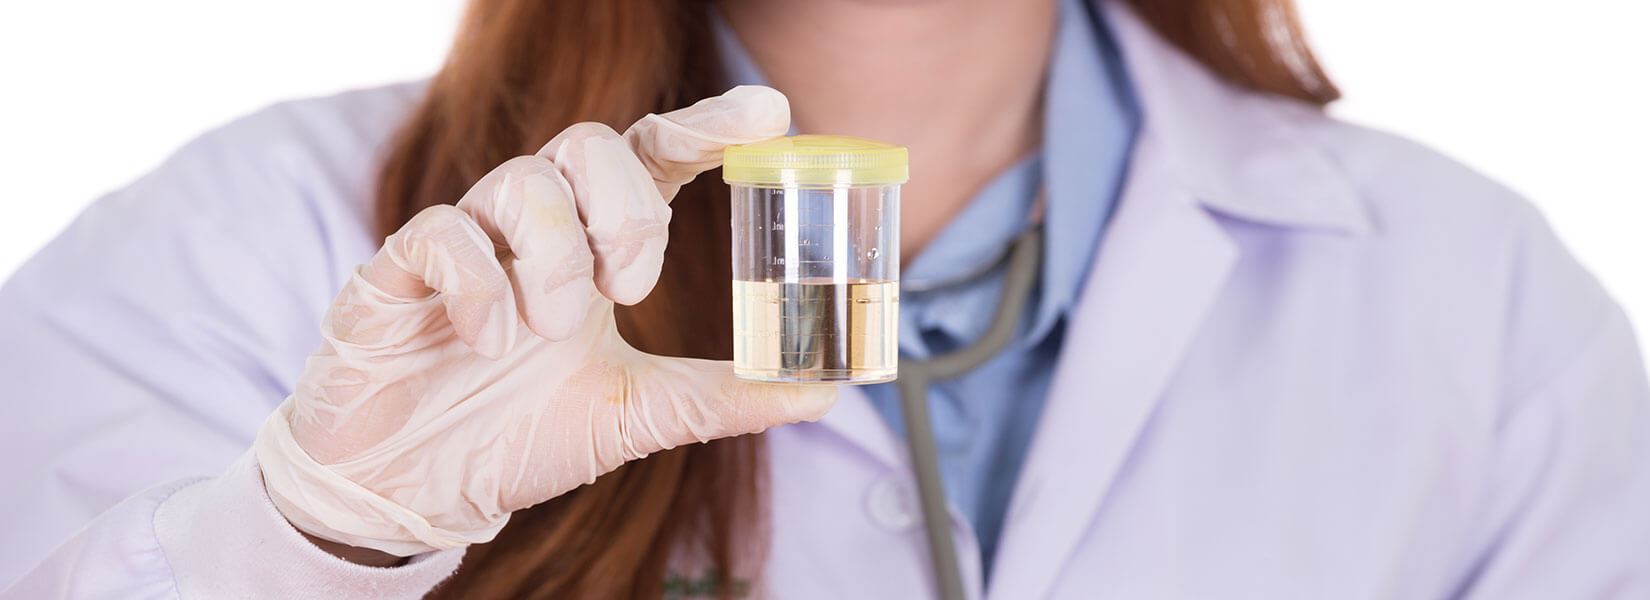 Nurse holding a urine test in her hands